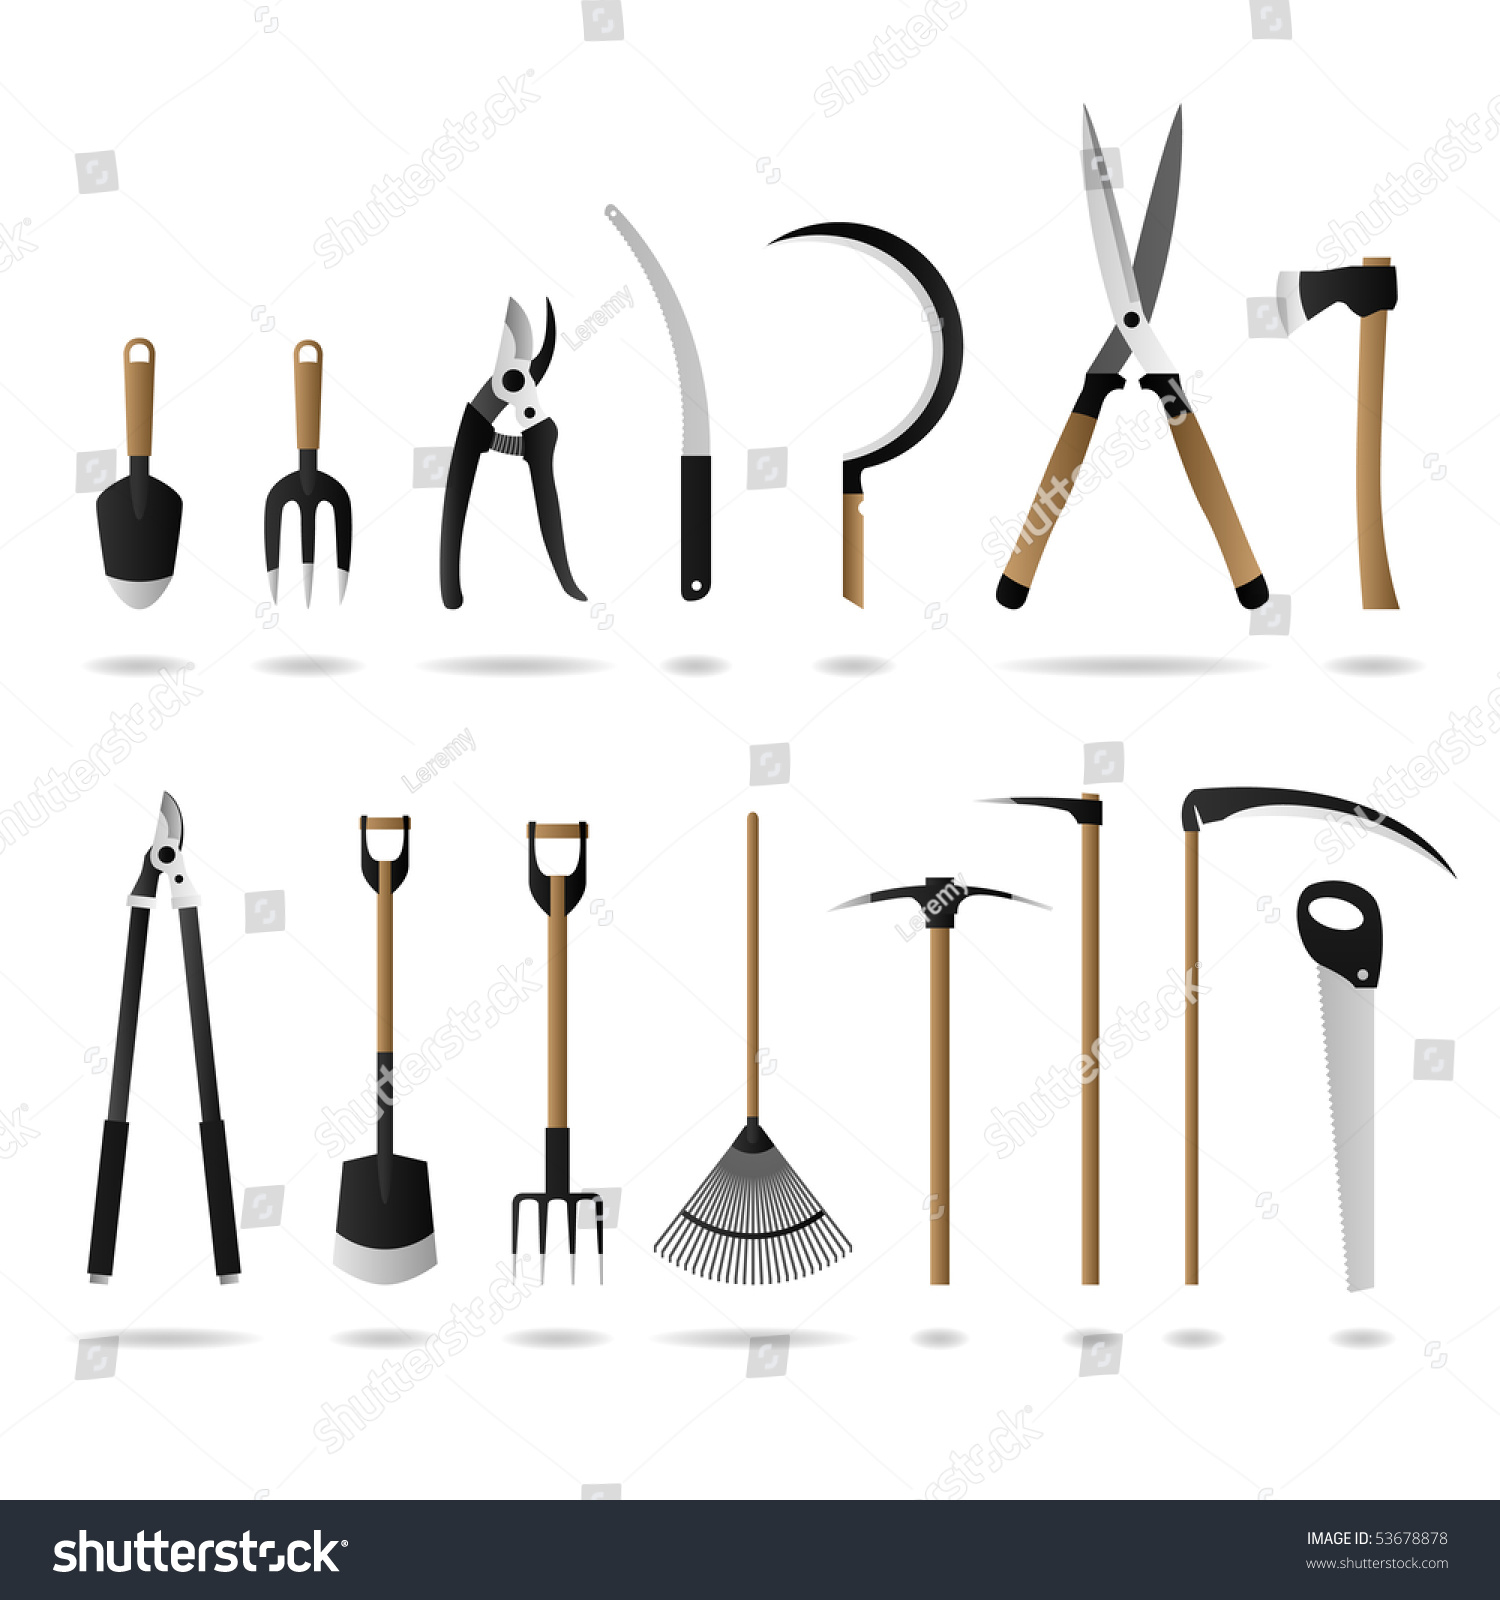 Gardening Set Tools Vector Stock Vector (Royalty Free) 53678878